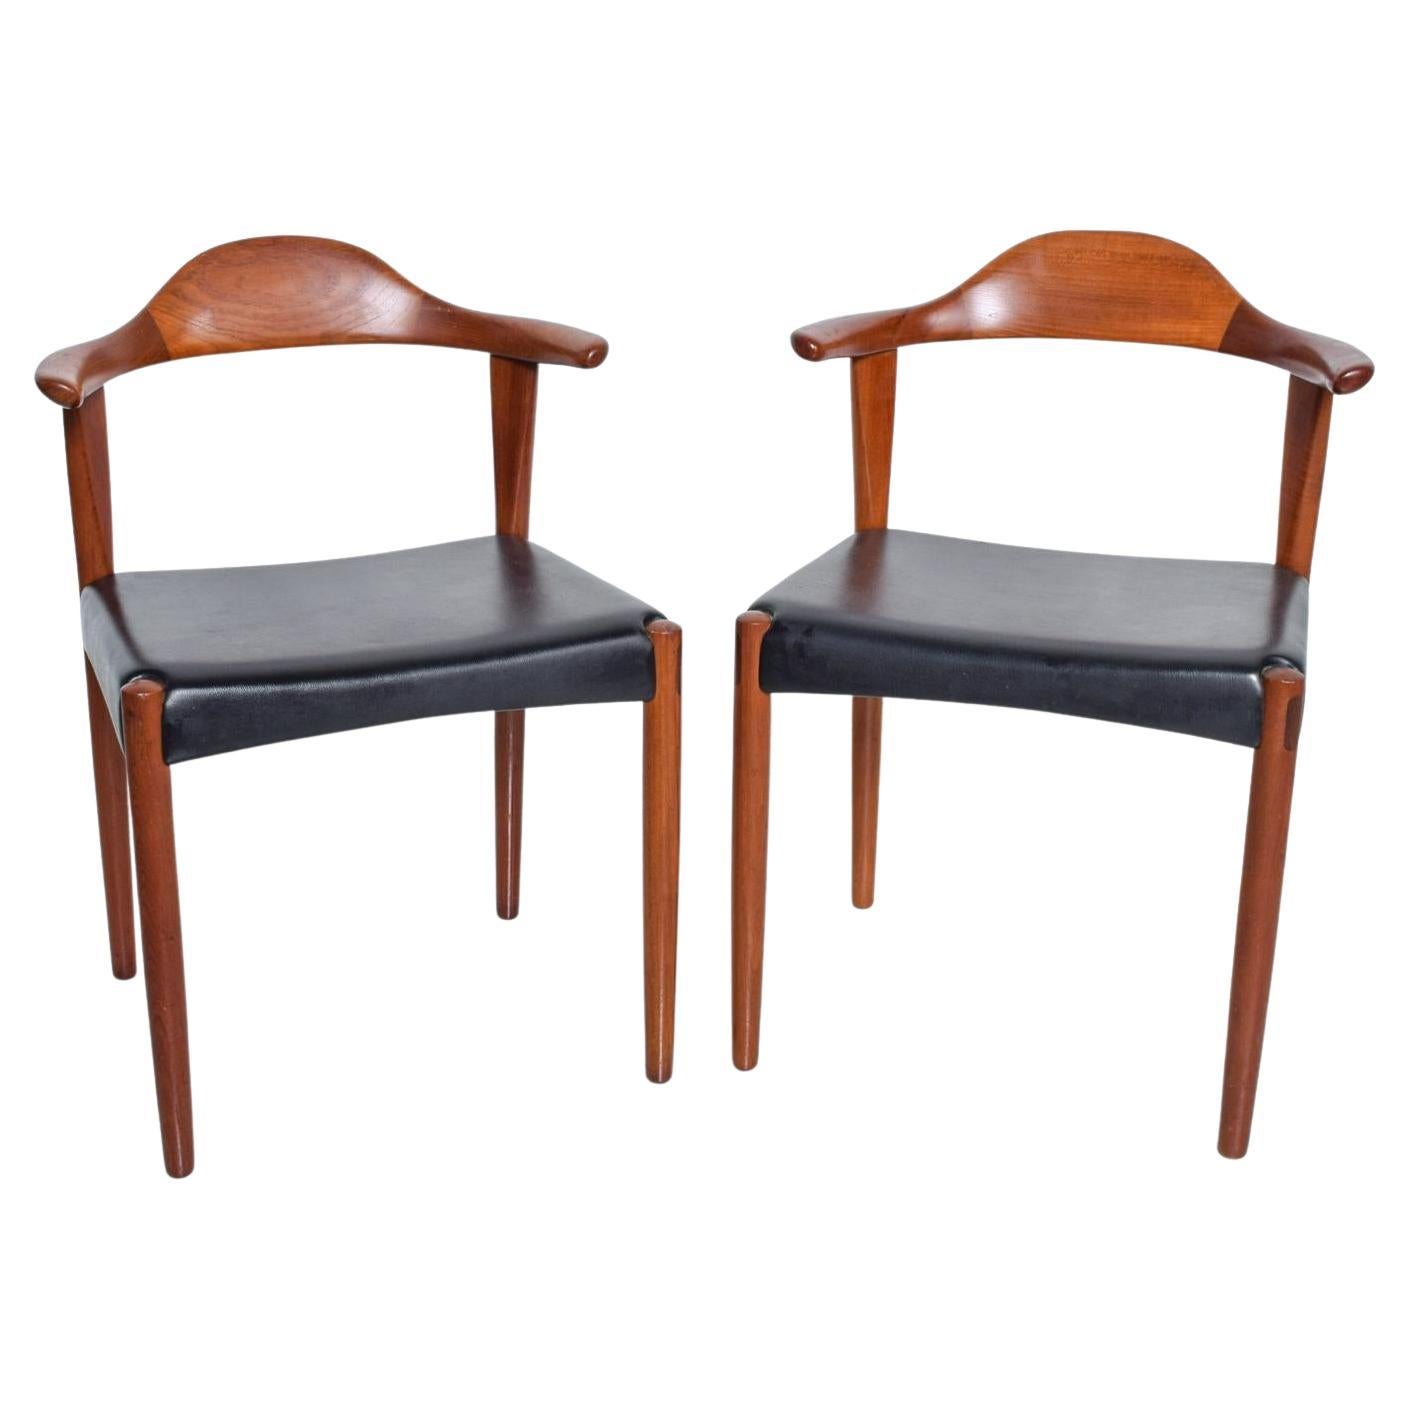  Pair Danish Modern Cow Horn Chairs Teakwood in the style of Hans Wegner 1960s